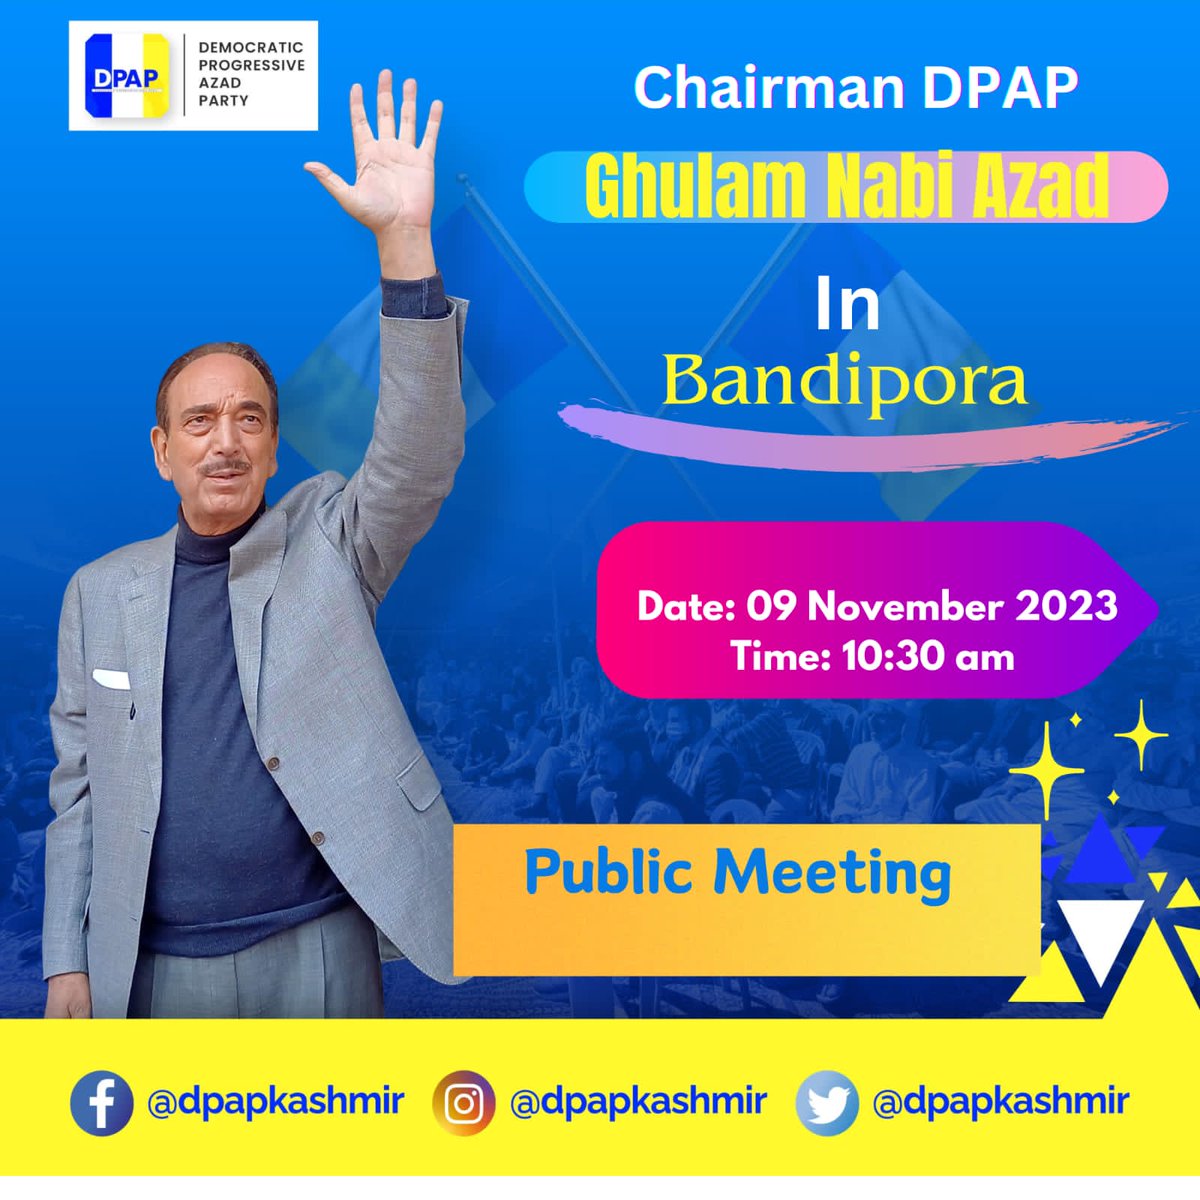 Join us Tommorow!! 09 November 2023 Bandipora. #bandipora #dpap #kashmir